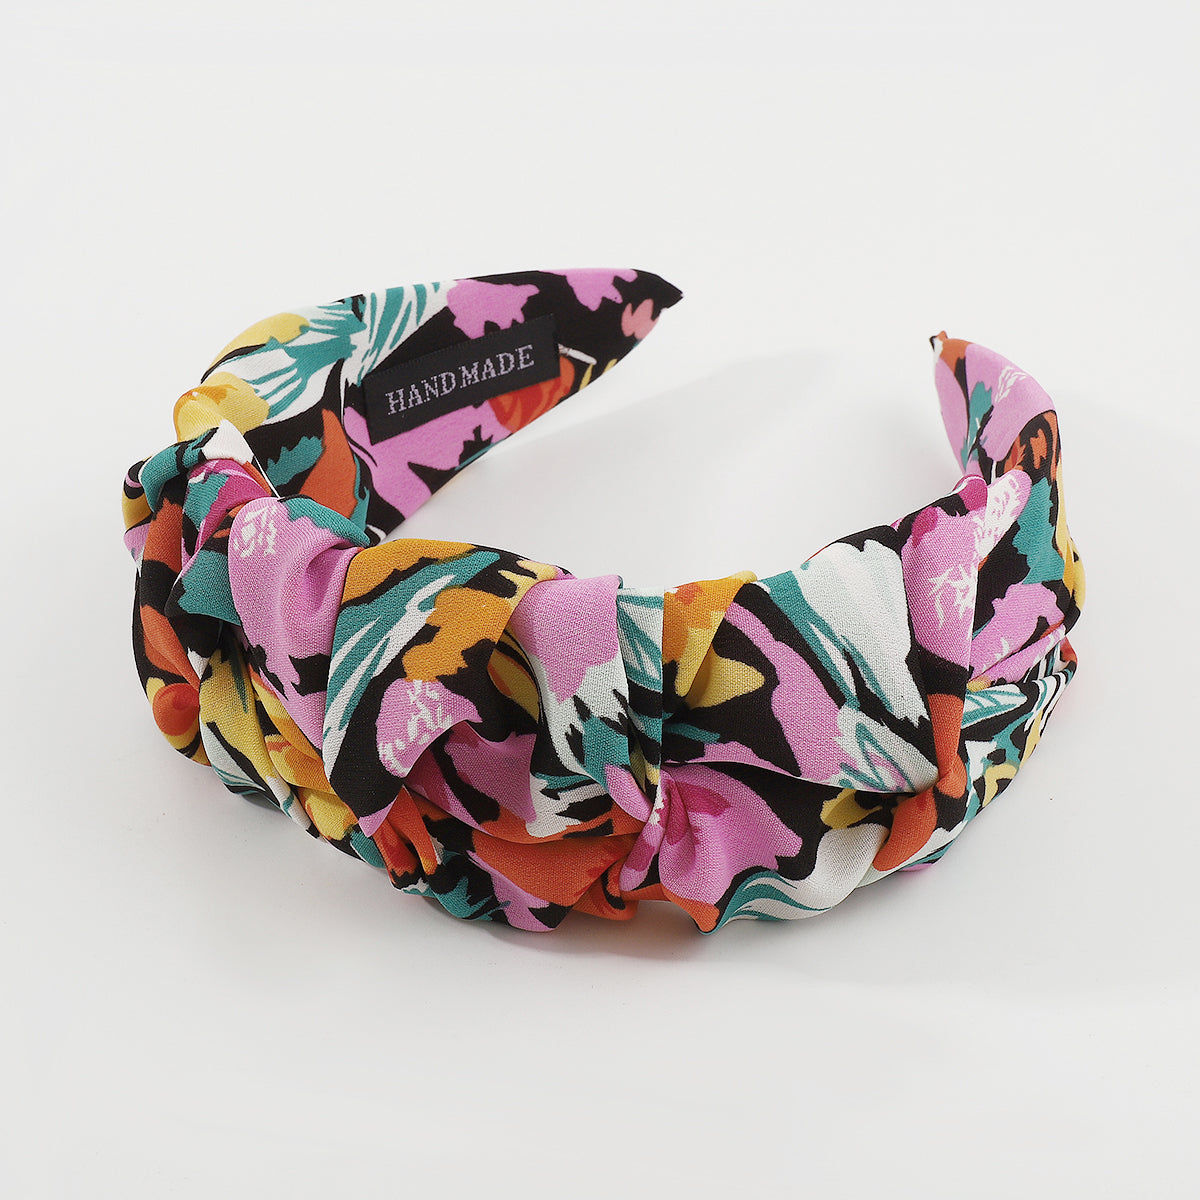 Bright Floral Print Padded Headbands medyjewelry